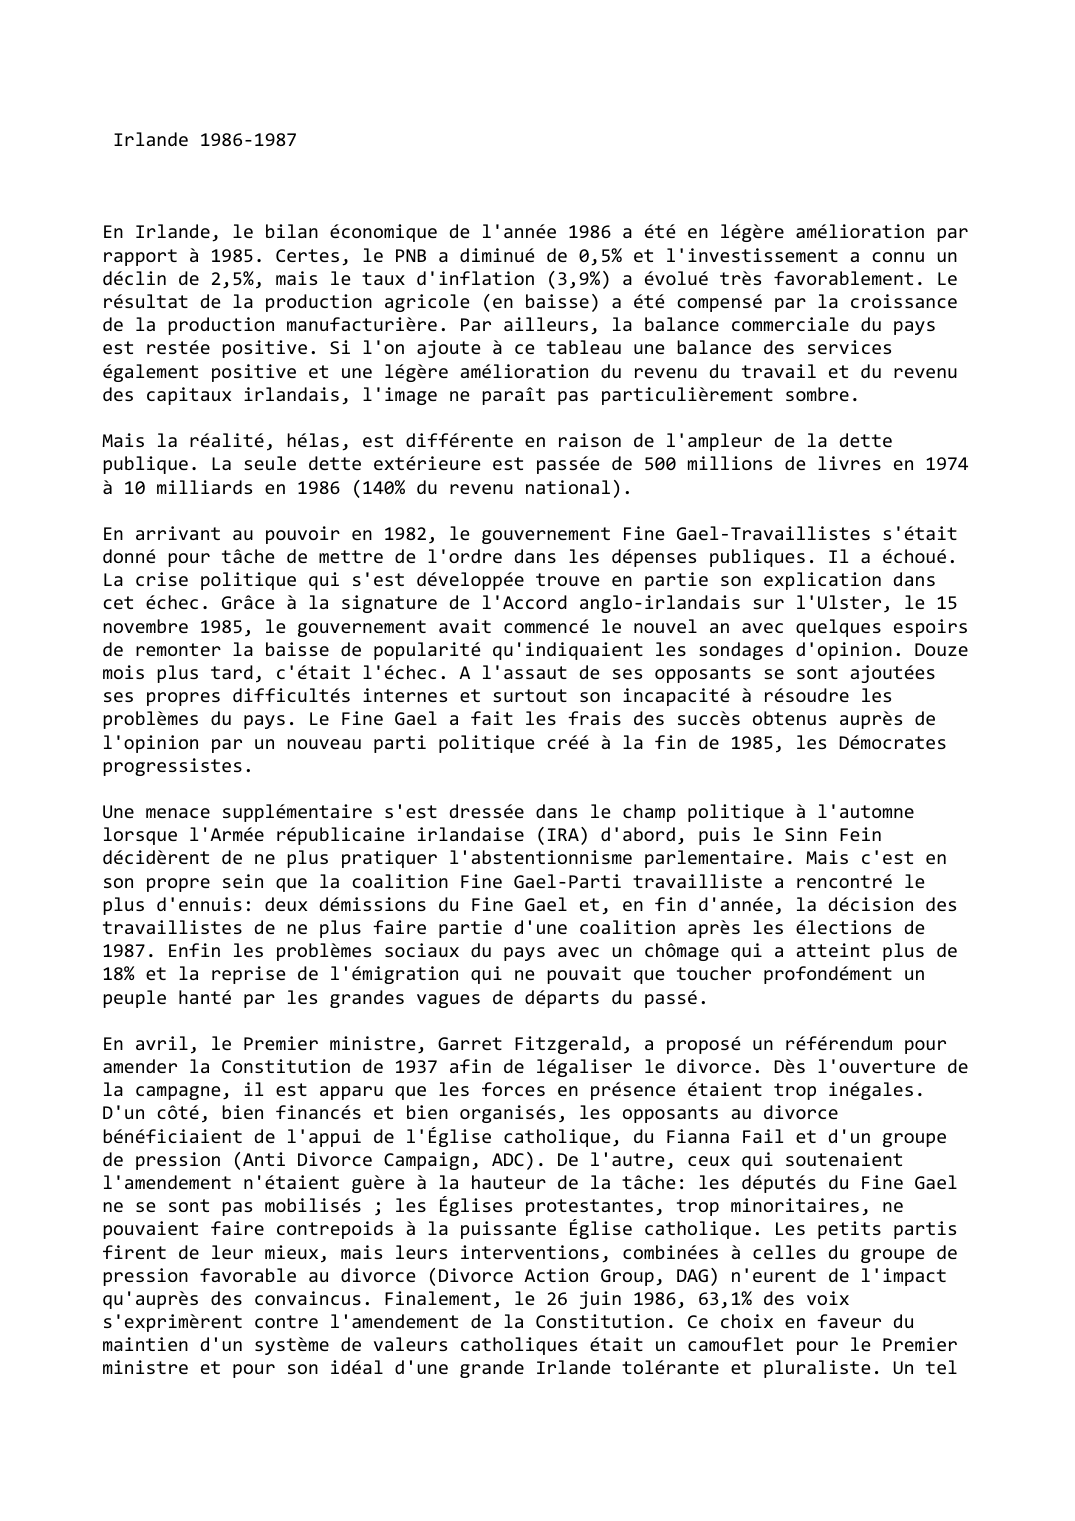 Prévisualisation du document Irlande (1986-1987)